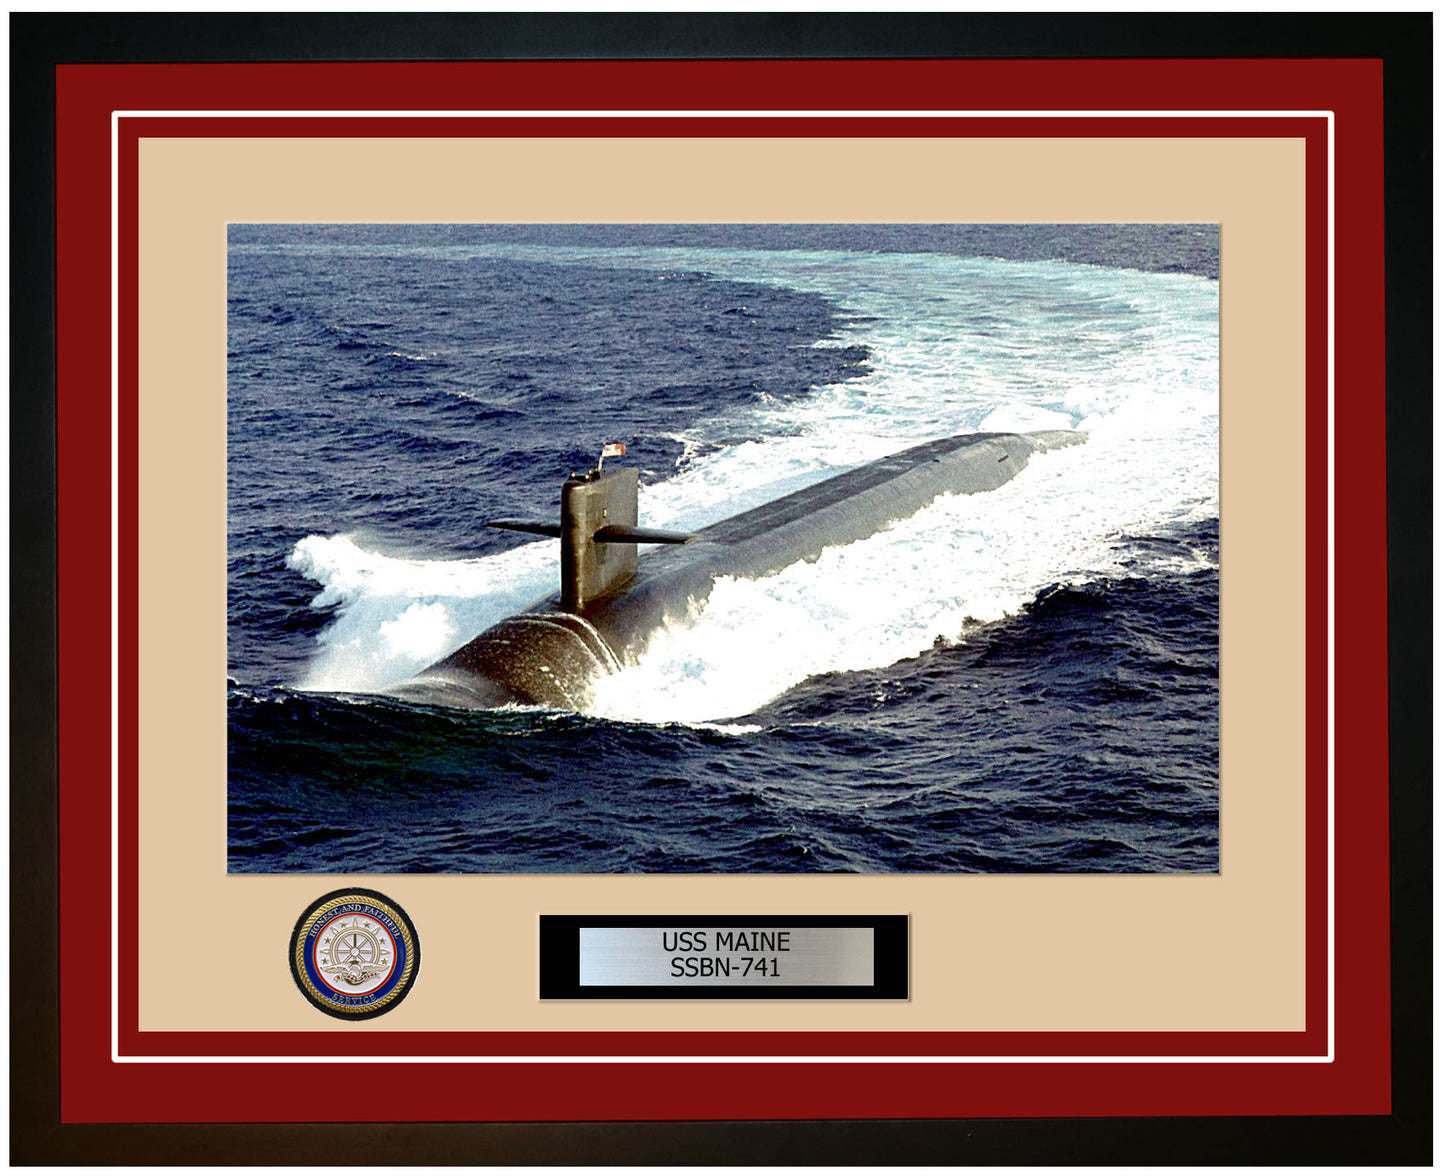 USS Maine SSBN-741 Framed Navy Ship Photo Burgundy